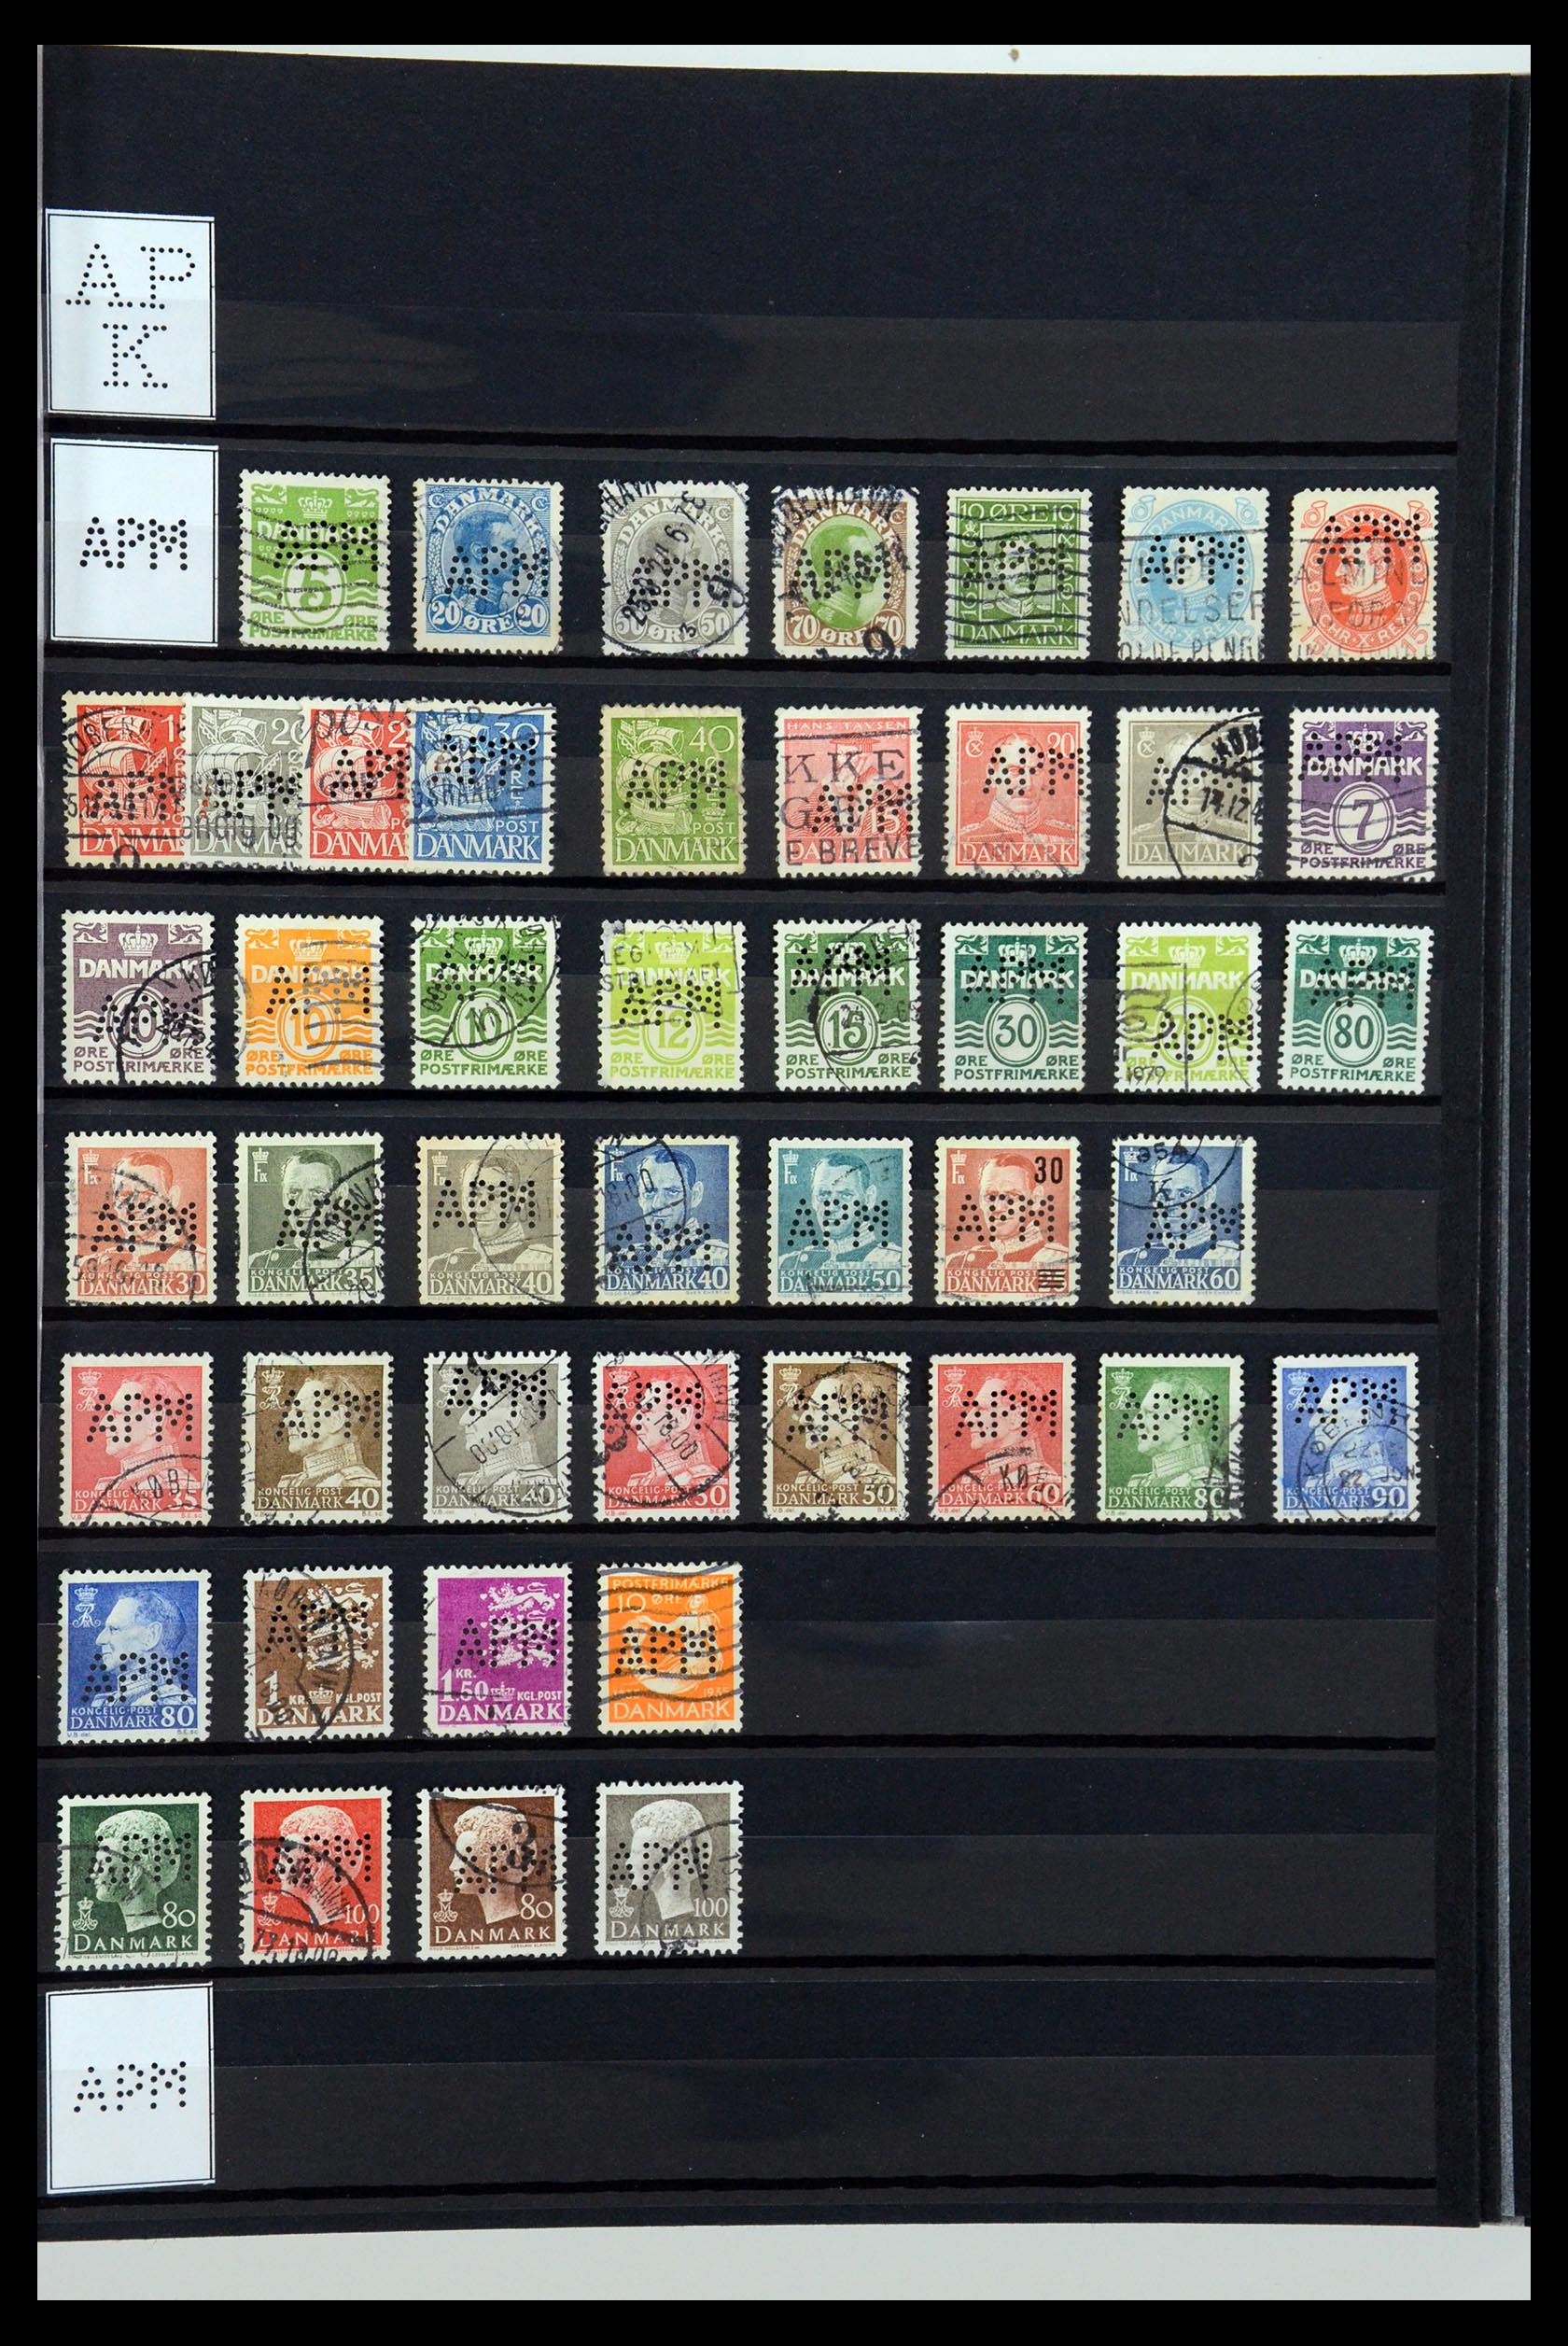 36396 009 - Stamp collection 36396 Denmark perfins.